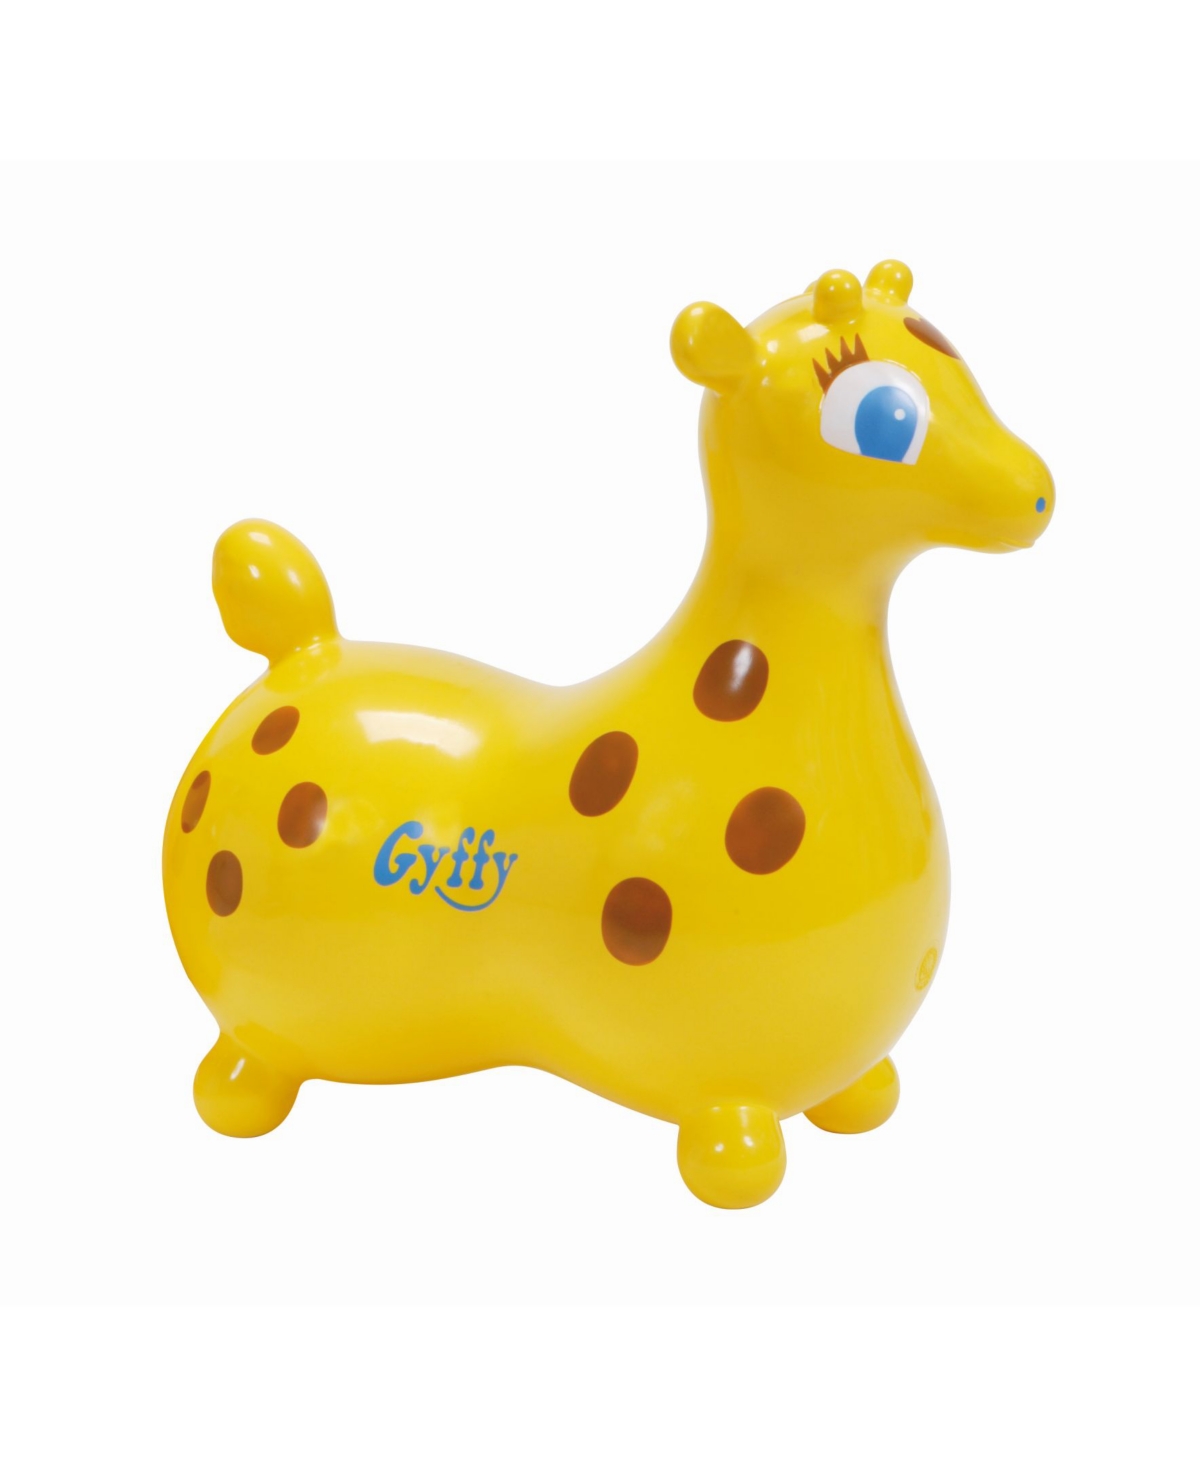 Gymnic Gyffy The Giraffe Inflatable Bounce Ride In Yellow